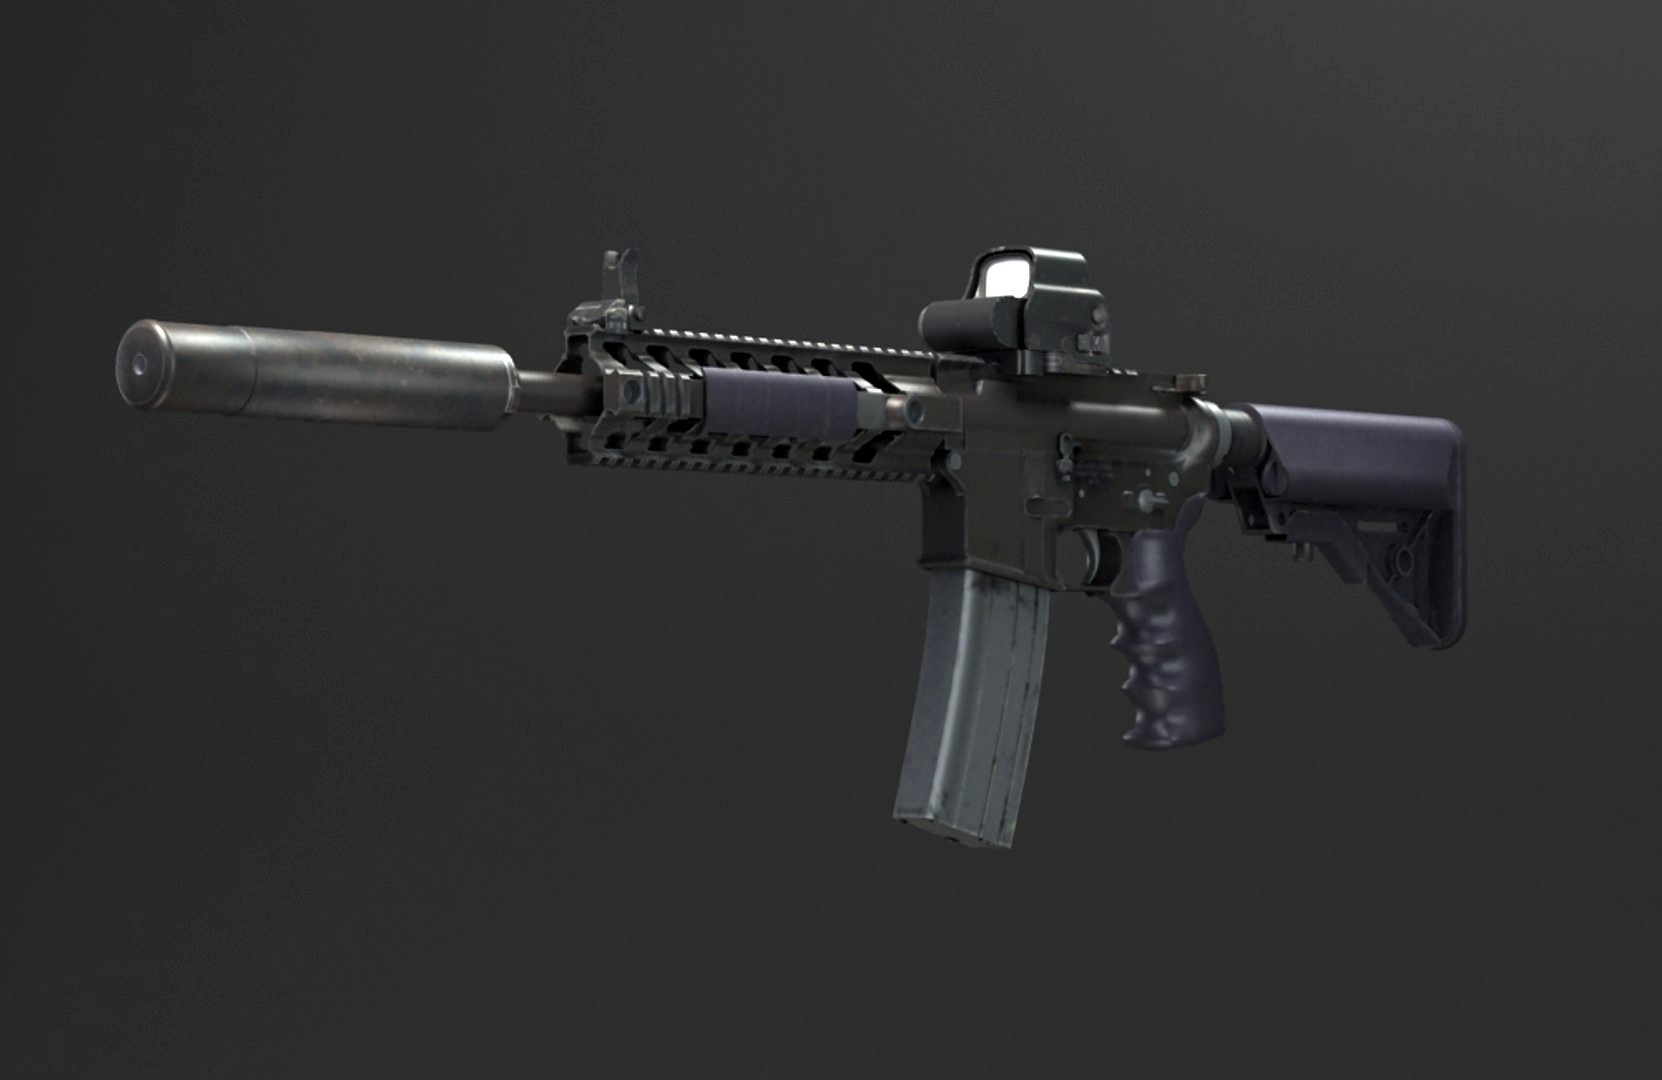 Mk-16 automatic rifle  pistol  machine gun  sniper rifle